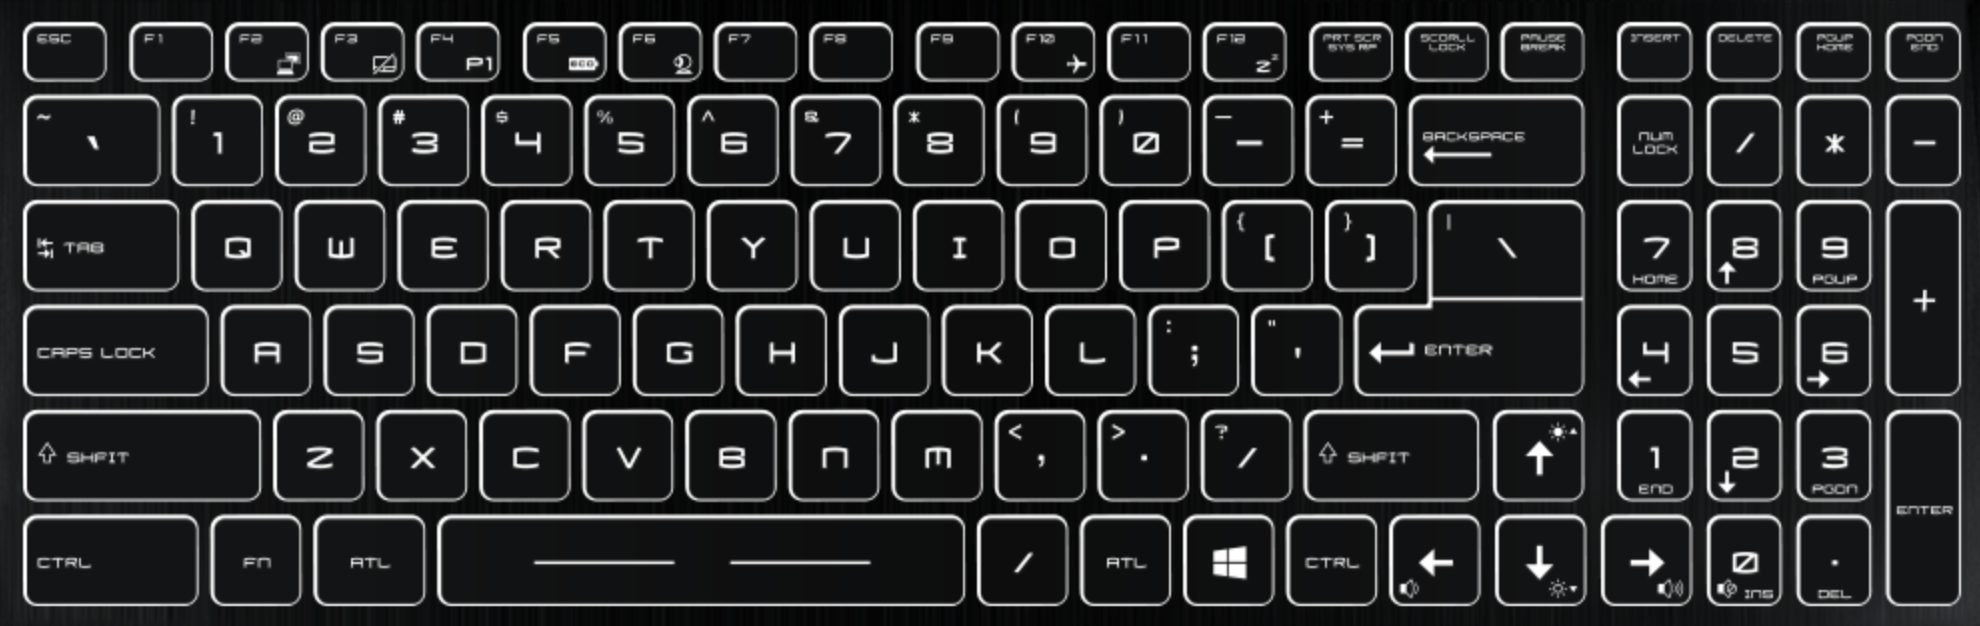 msi-ge63-keyboard-key-replacement.jpg